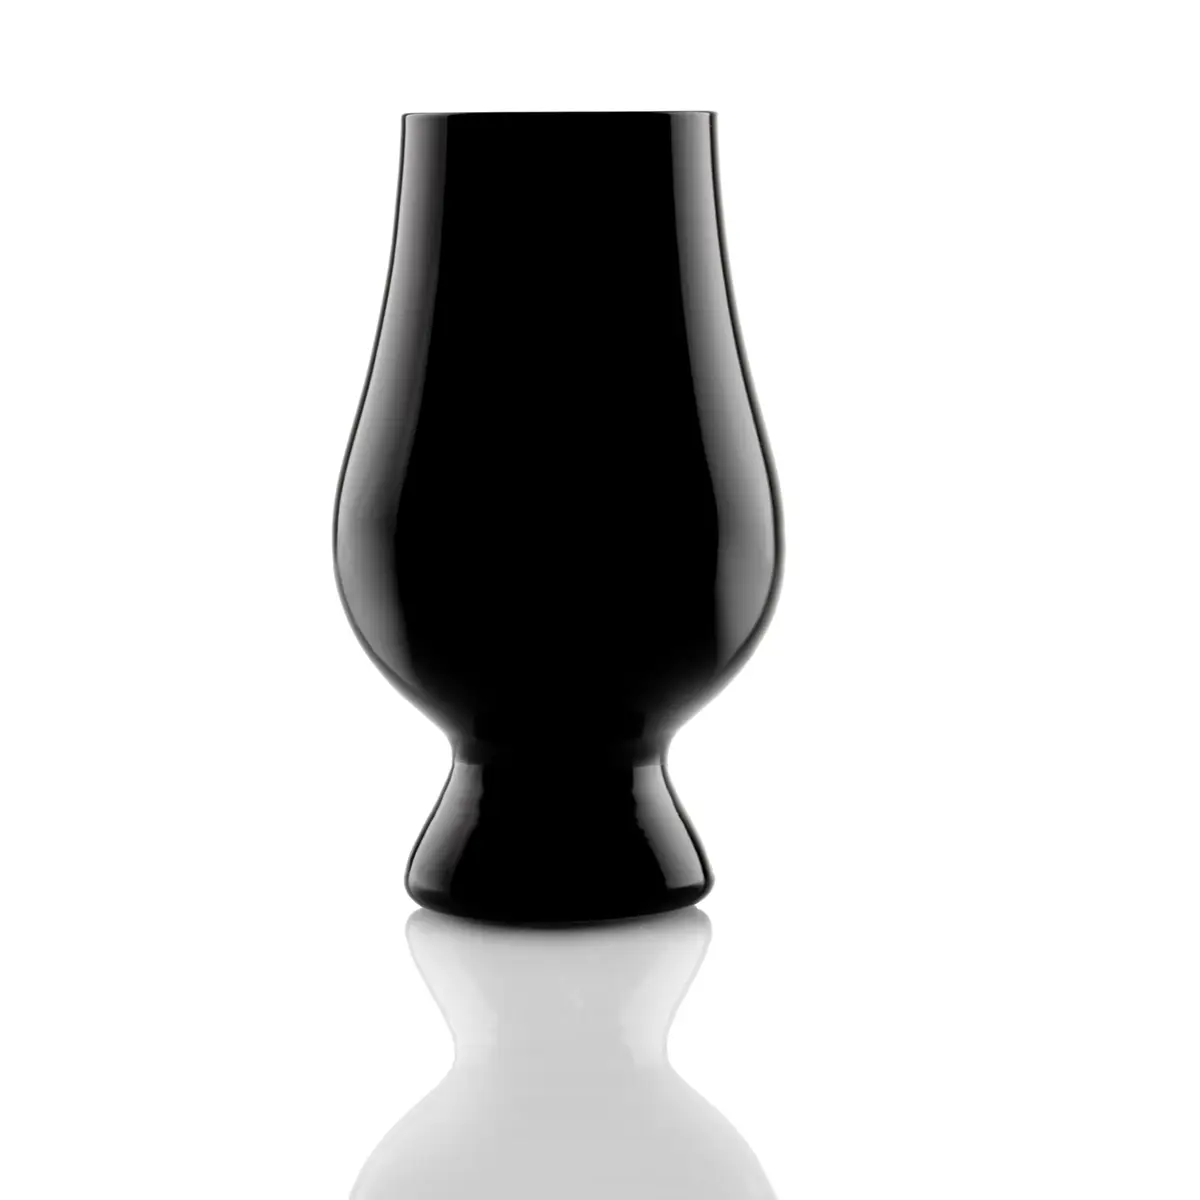 Coloured Glencairn Glas - Schwarz - für Blind Whisky Tasting